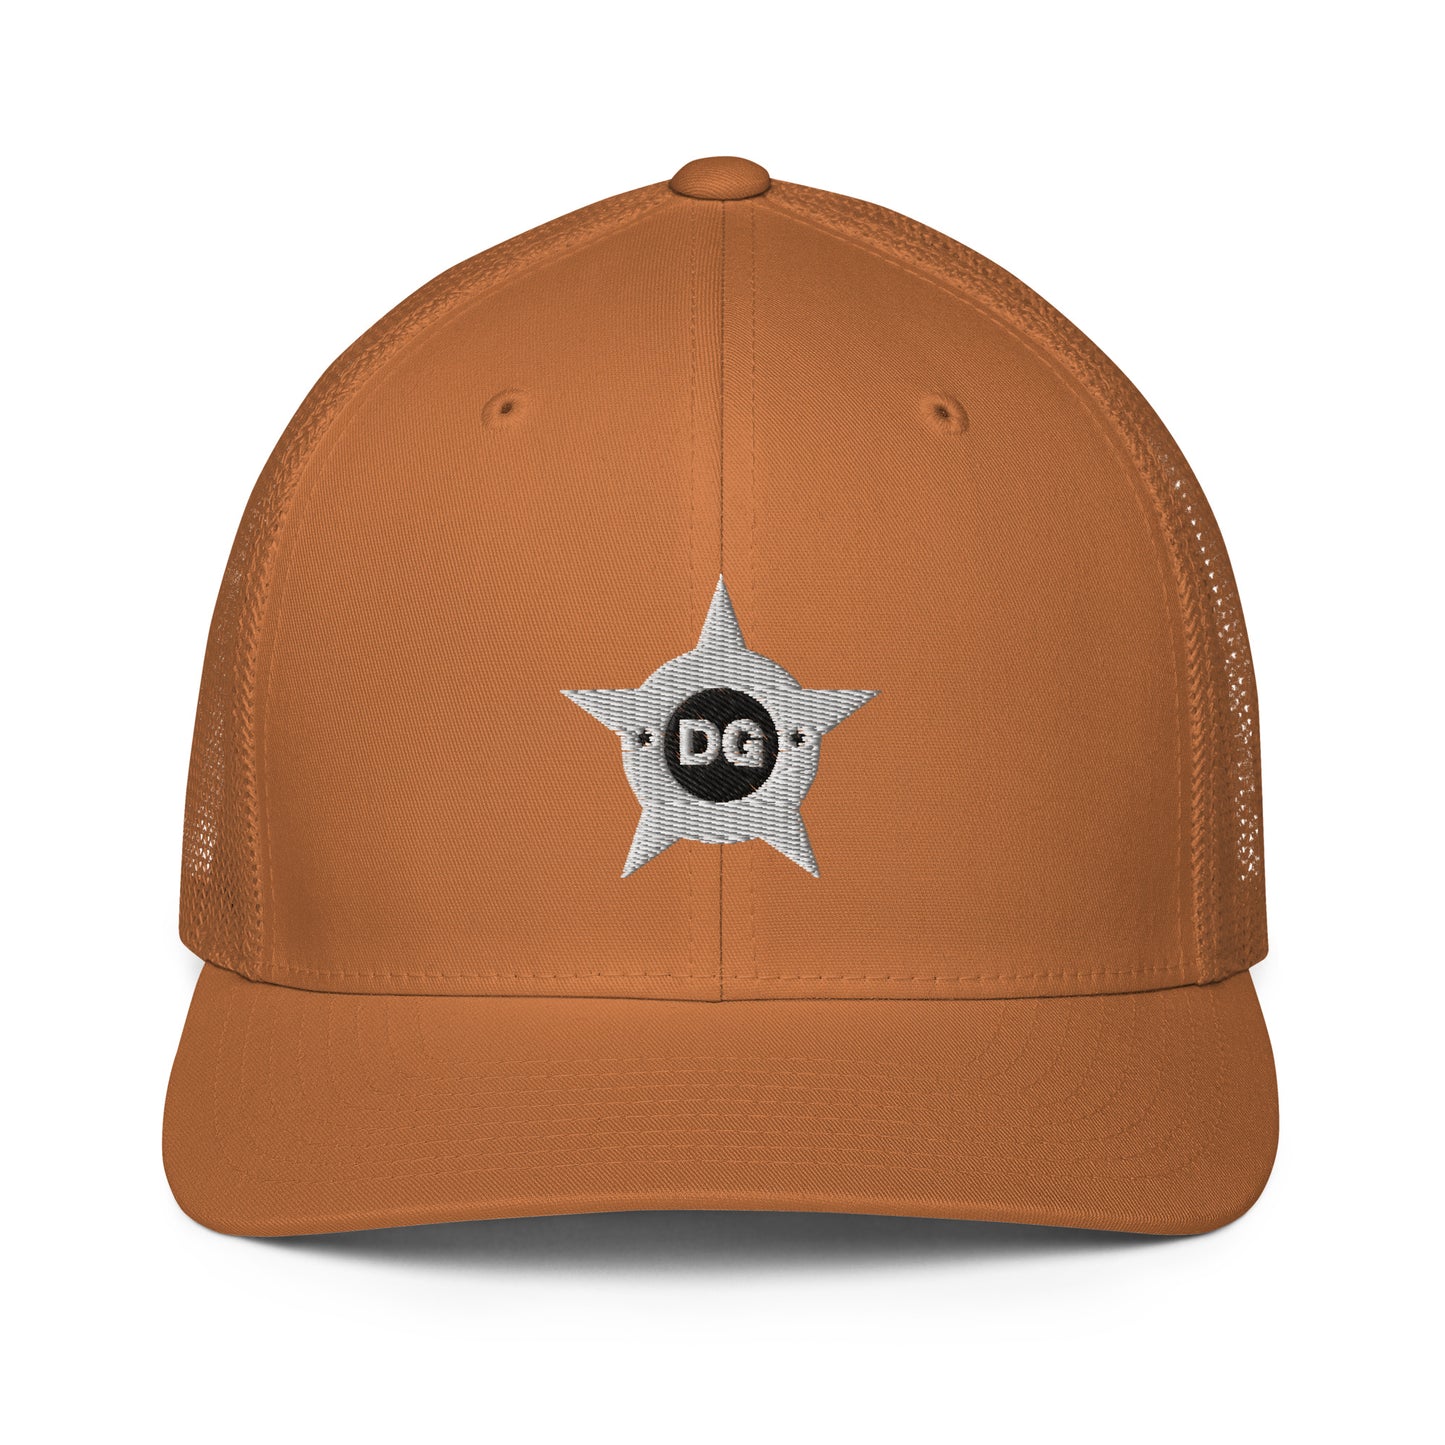 DG Closed-Back Trucker Cap